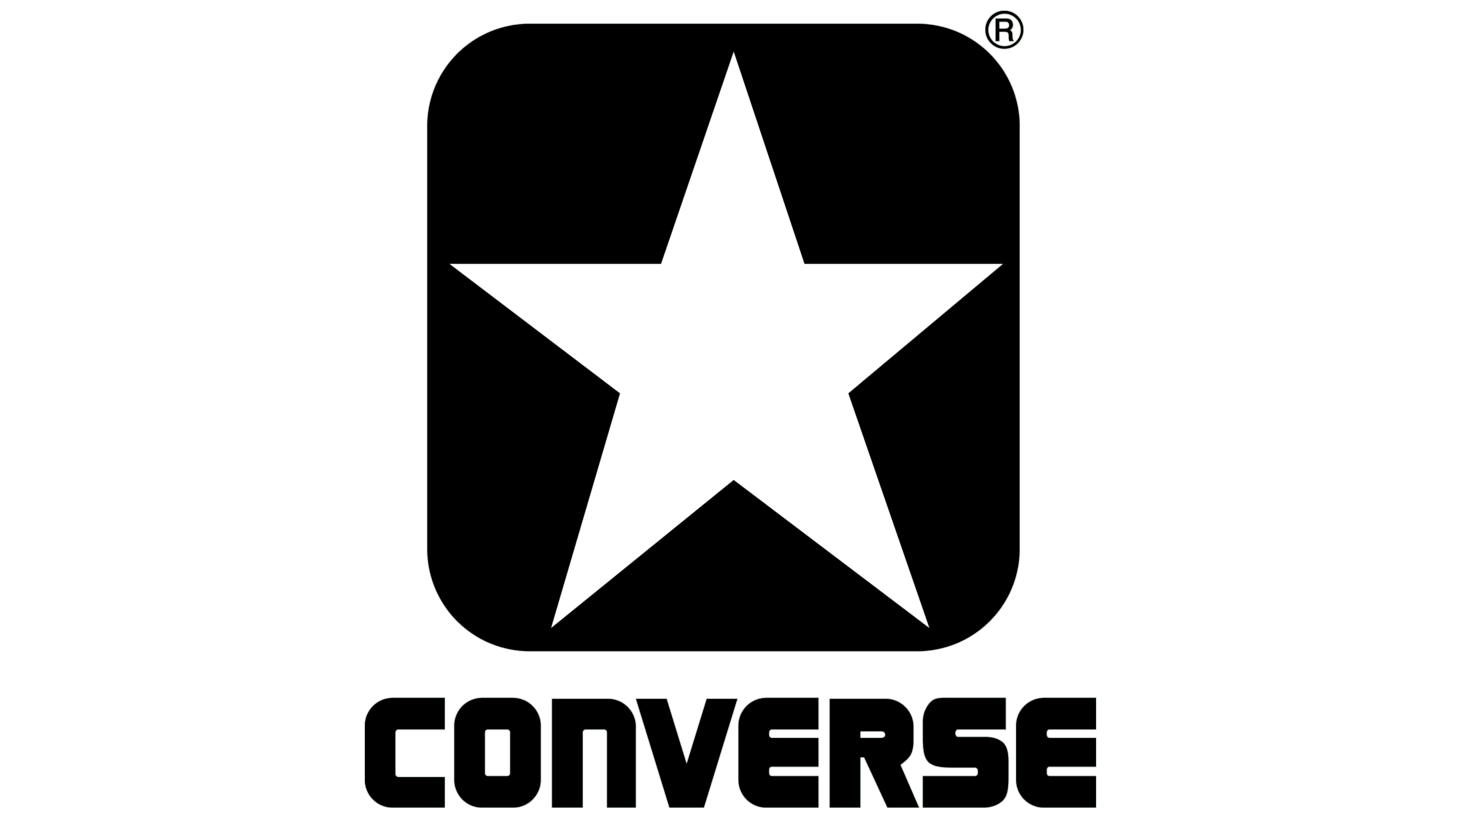 Converse sign 1977 2003